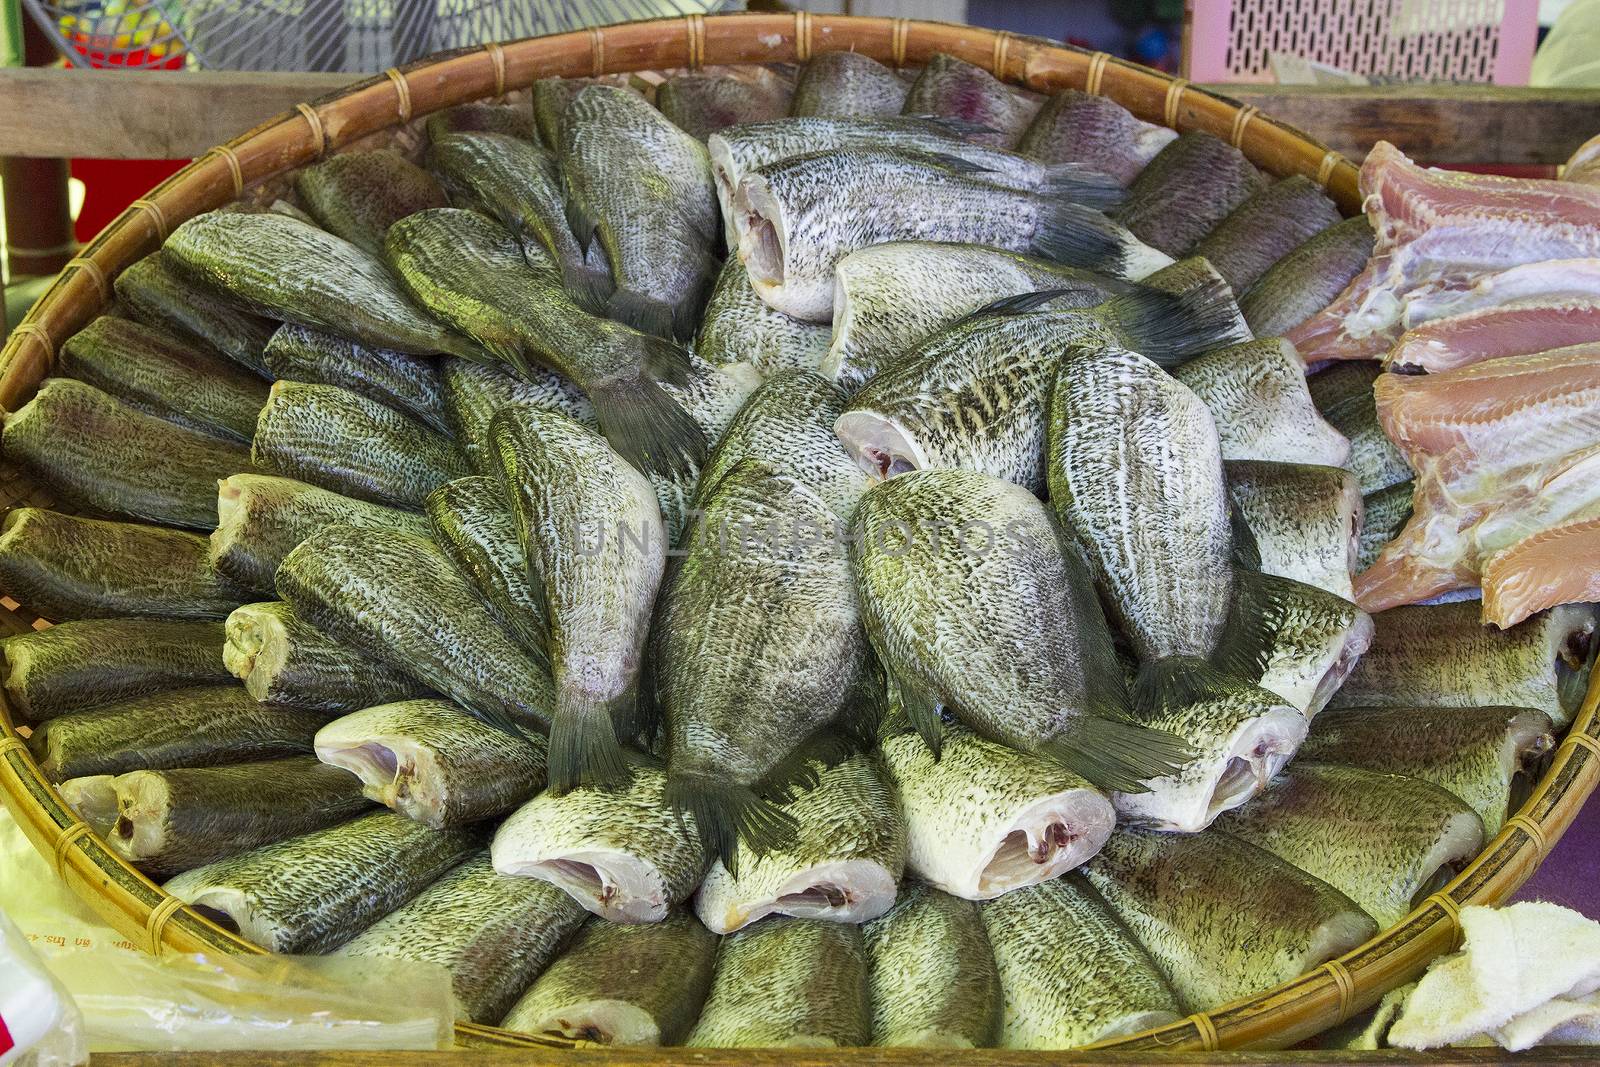  Trichogaster pectoralis arrange on rattan in market in asian food thai food (Fish)